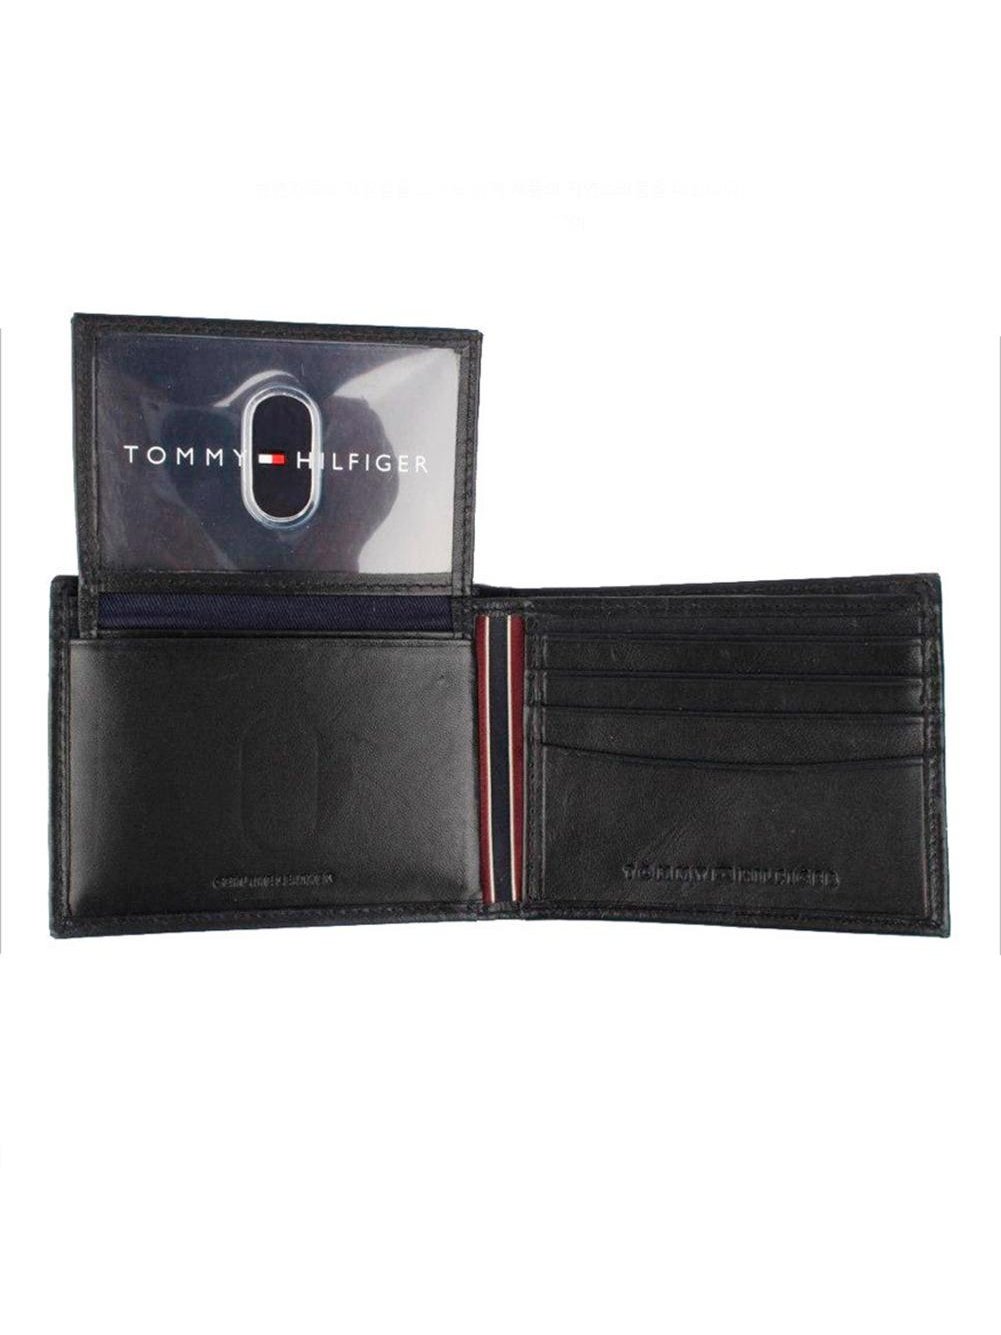 Tommy Hilfiger Mens Genuine Leather Credit Card Passcase Wallet Black 31TL22X060.